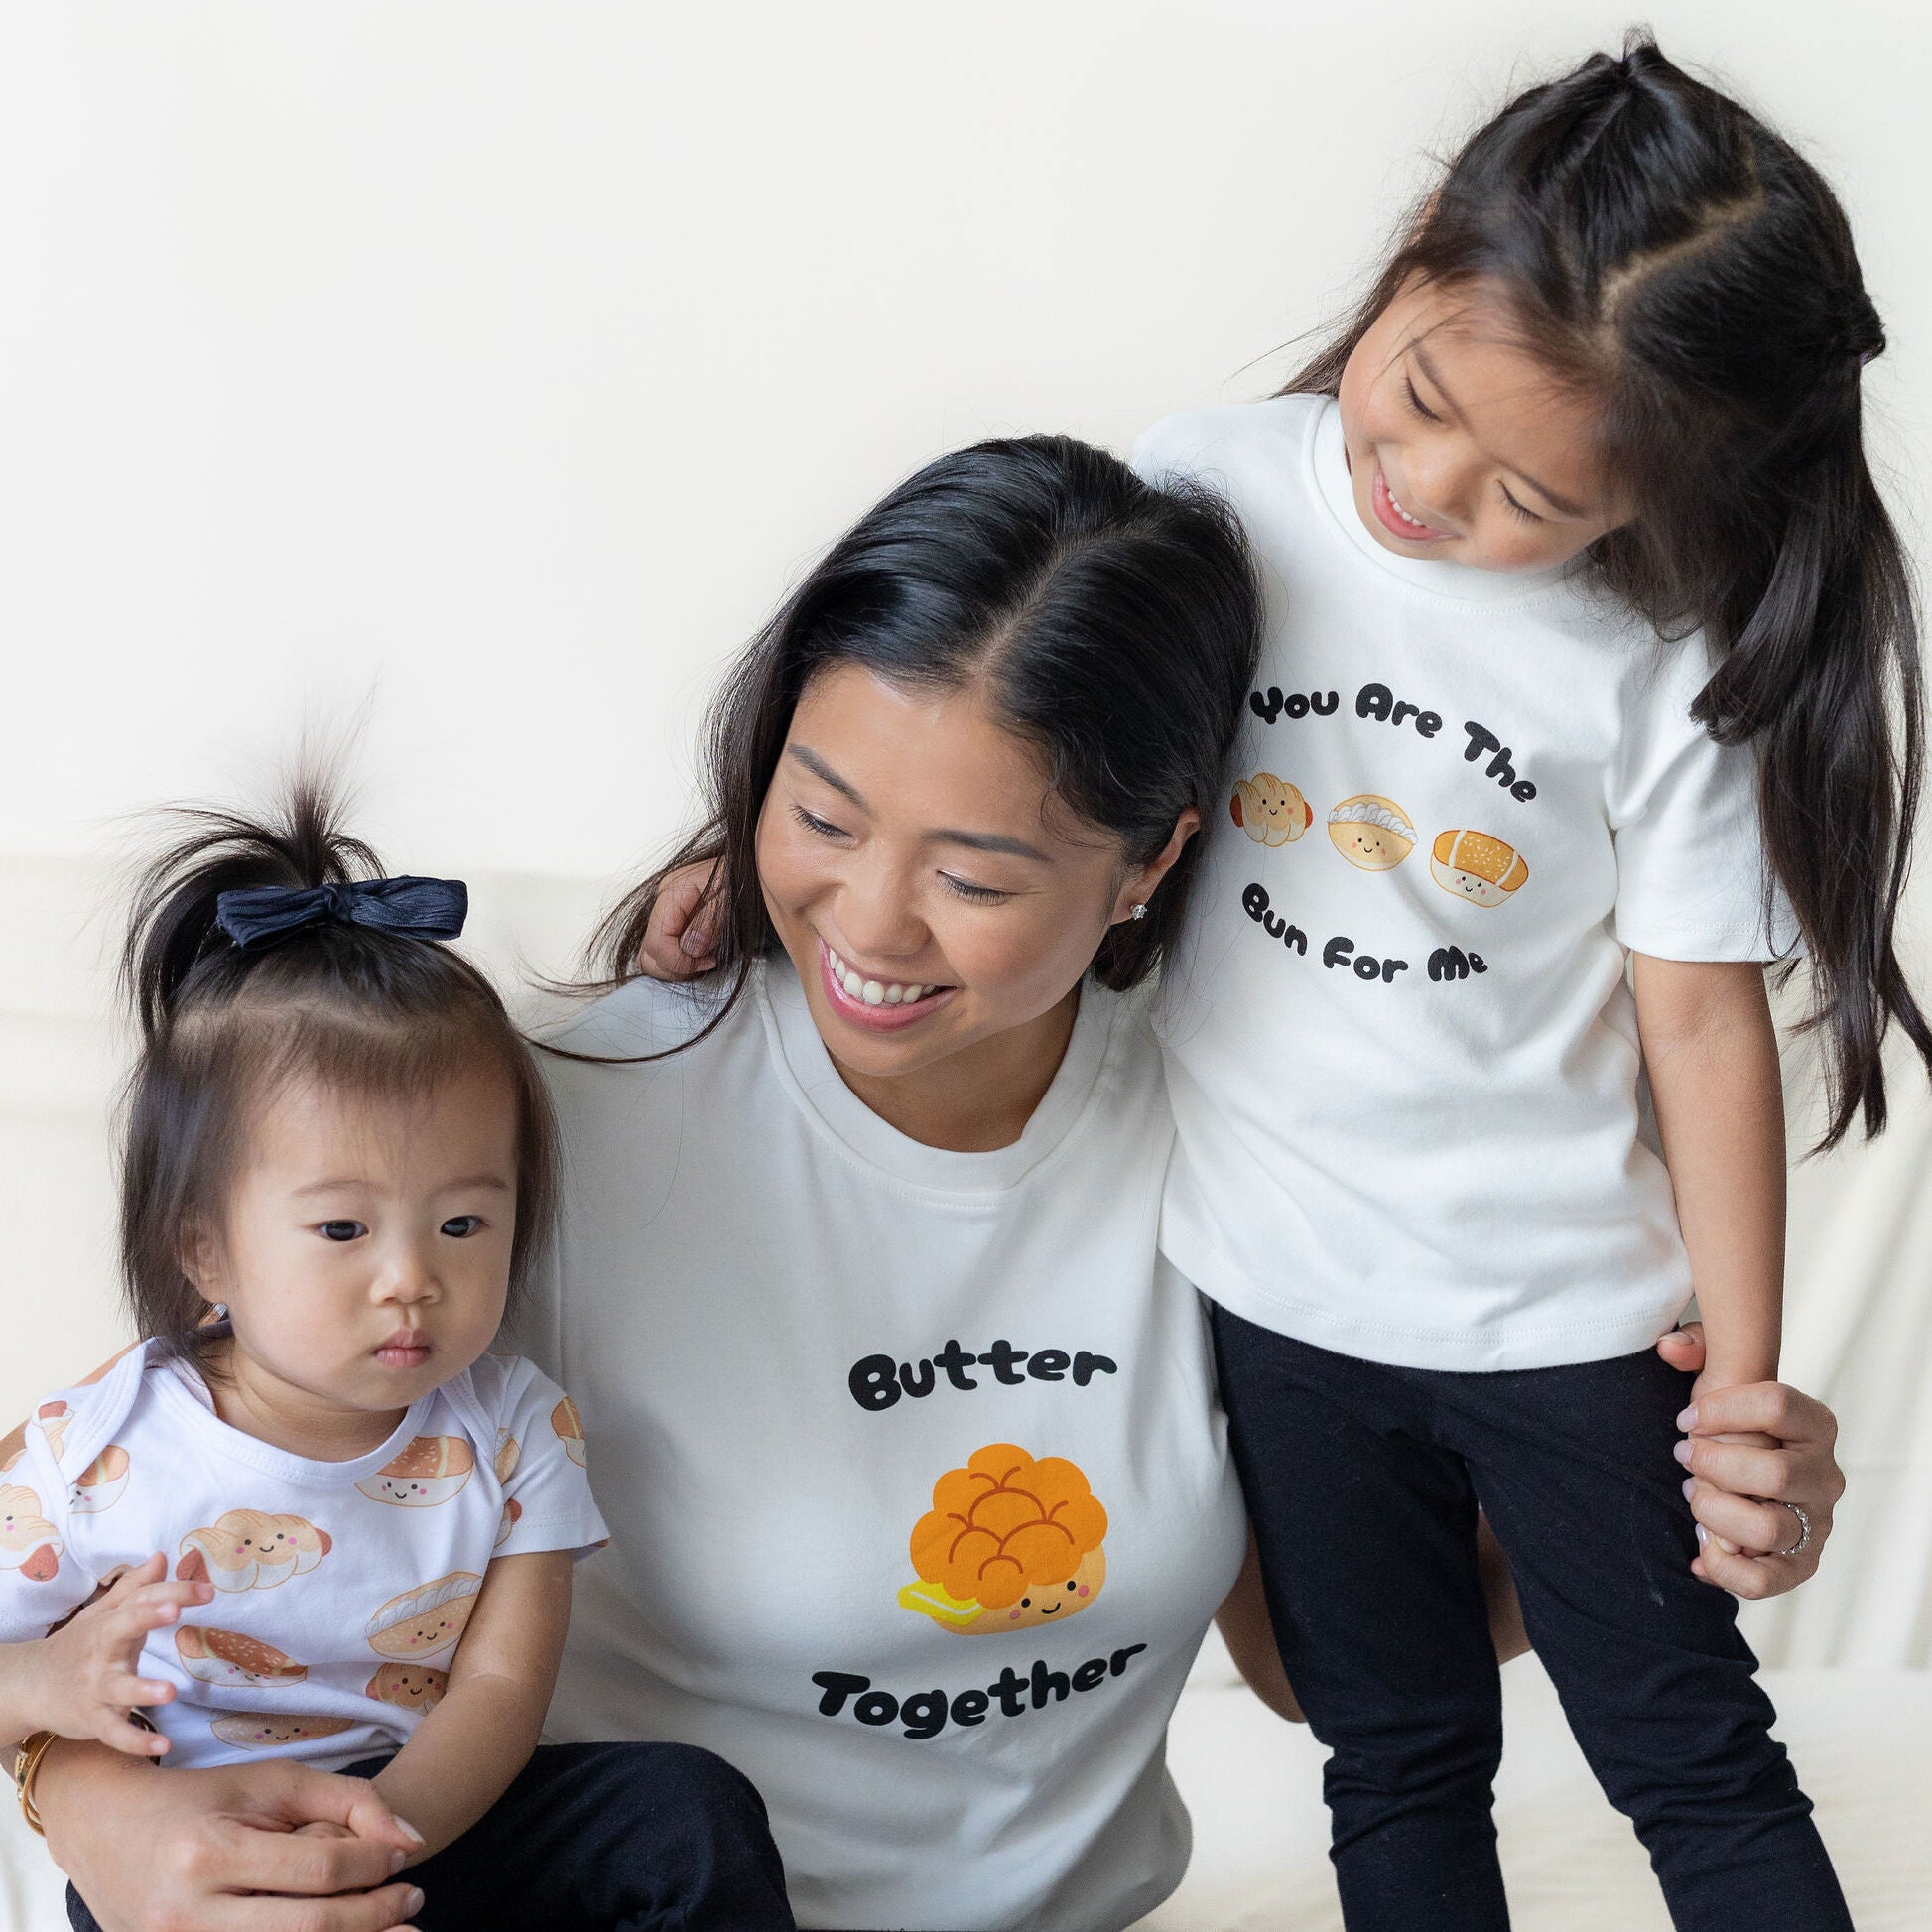 the wee bean organic cotton kids toddler tees t-shirt bakery buns